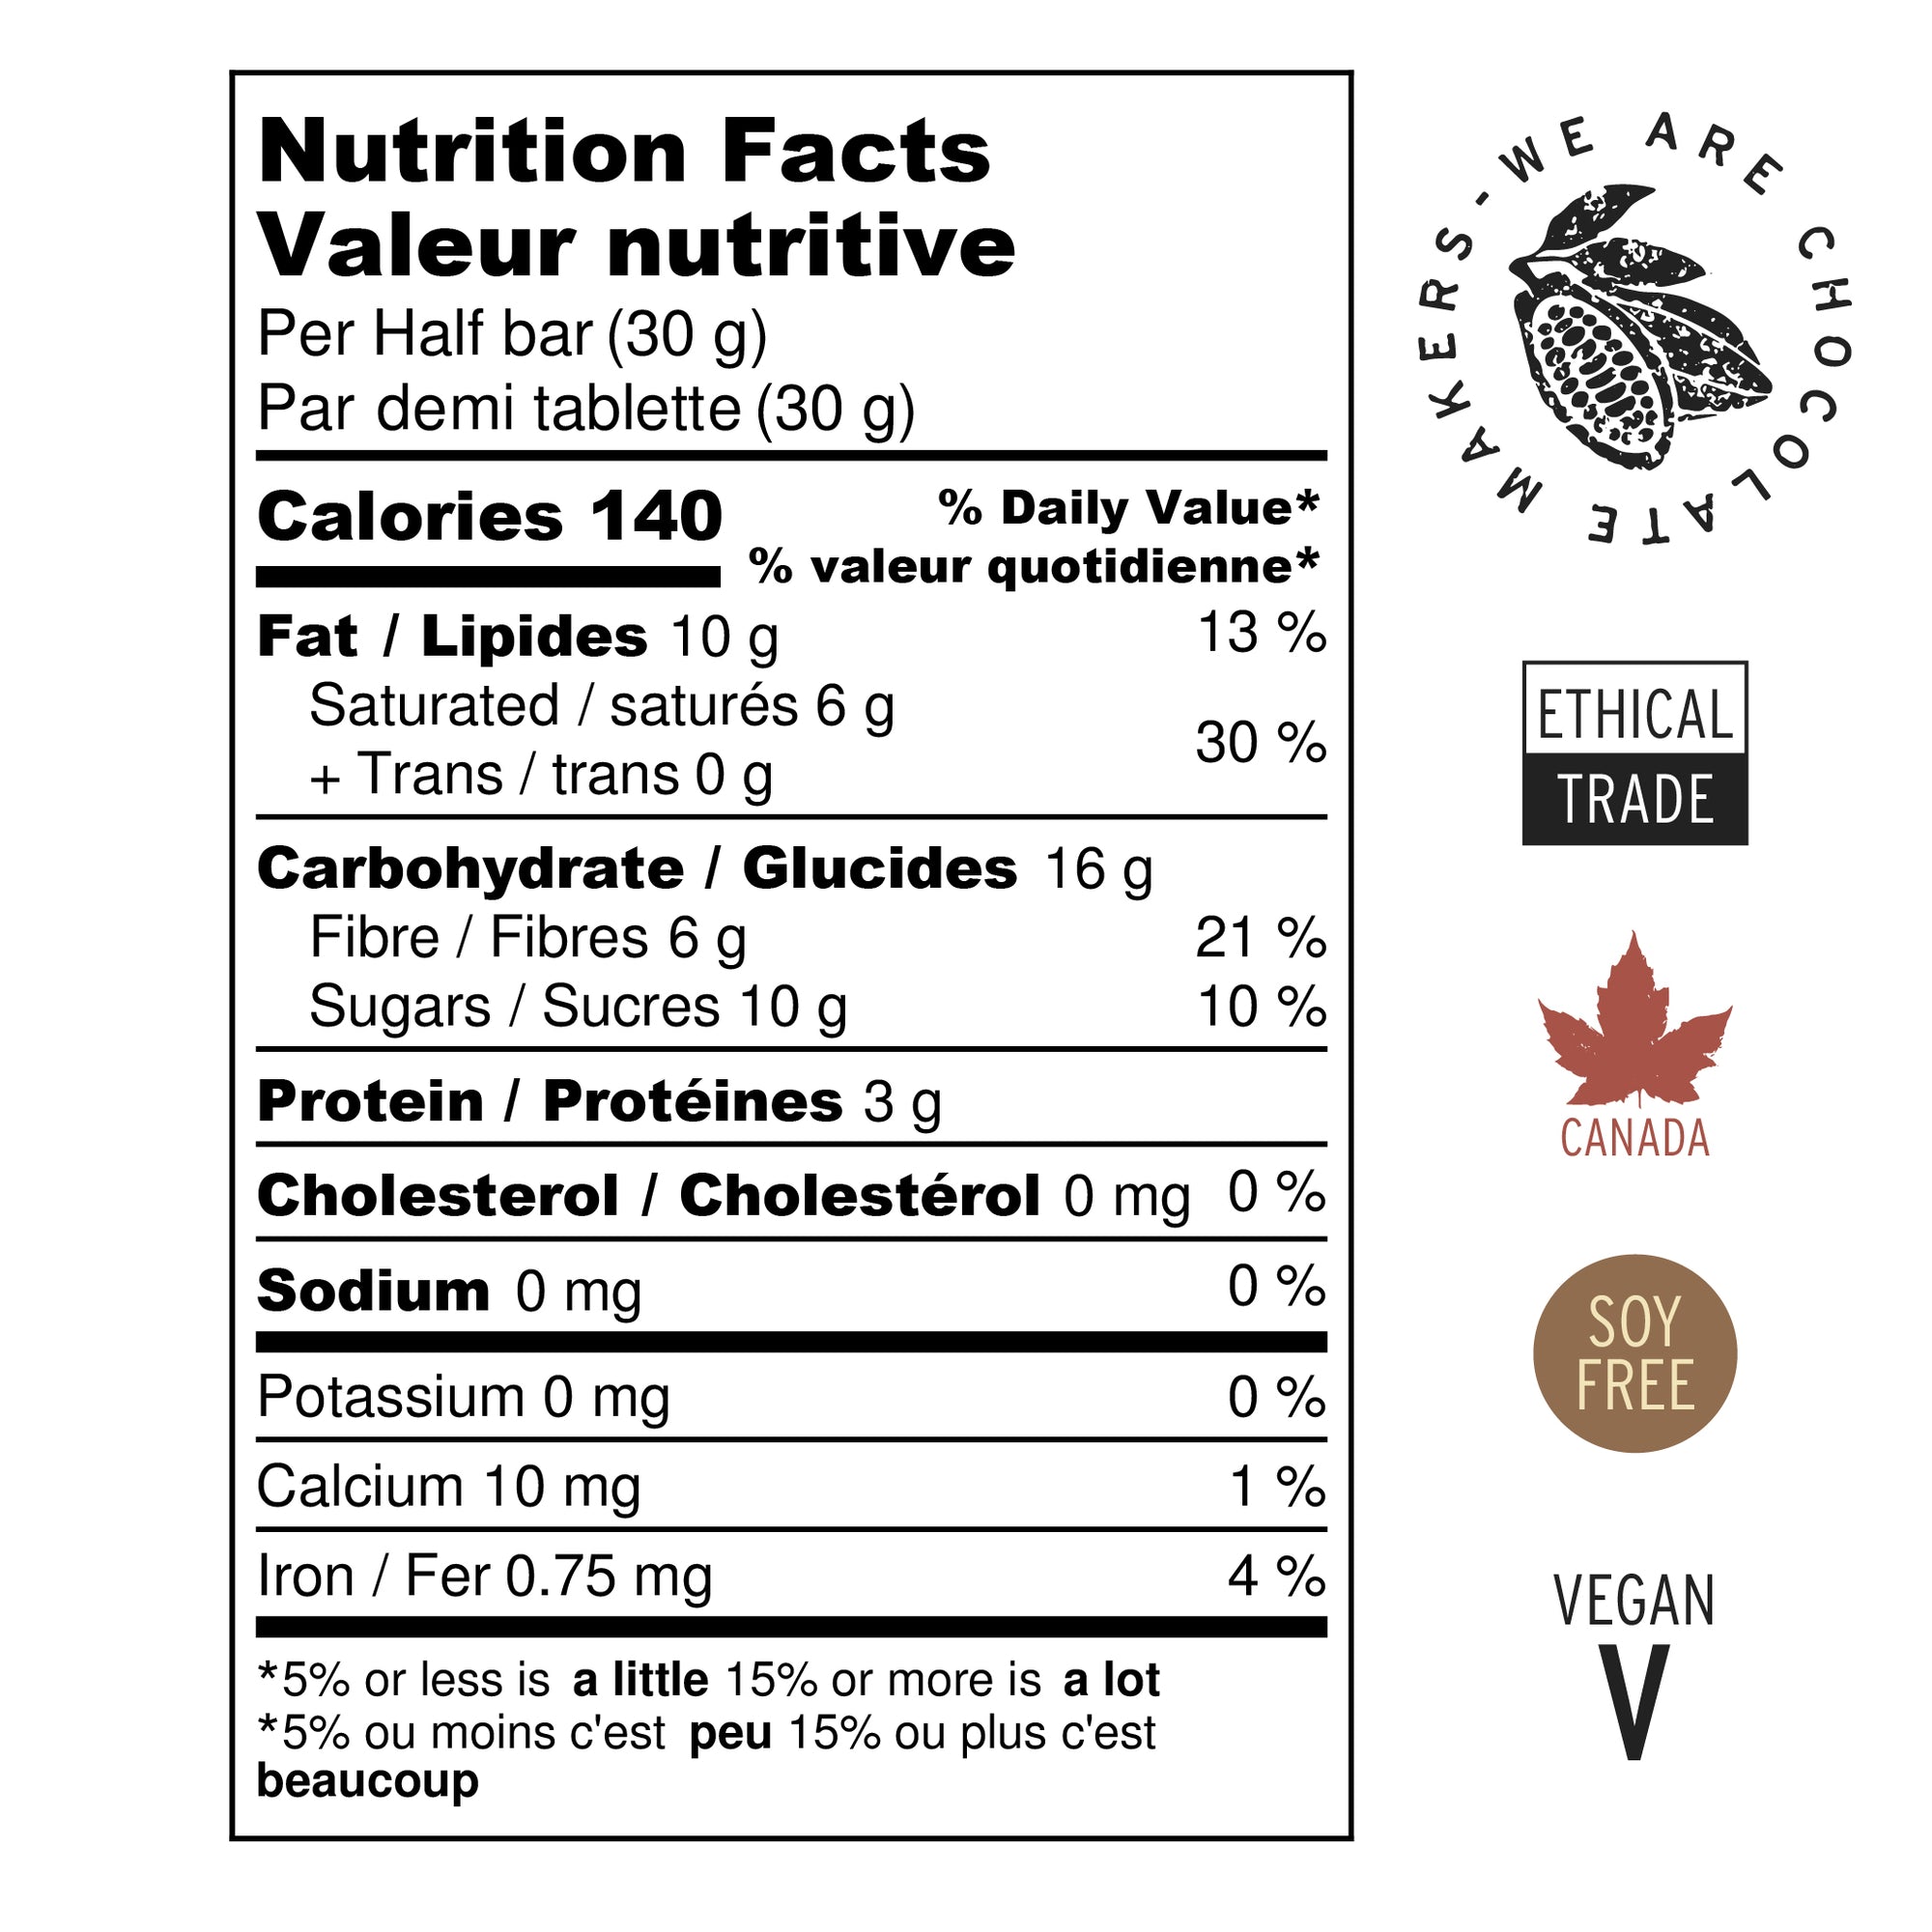 Zorzal 70% dark chocolate bar nutritional information. Vegan, Soy Free, Ethical Trade, Made in Canada